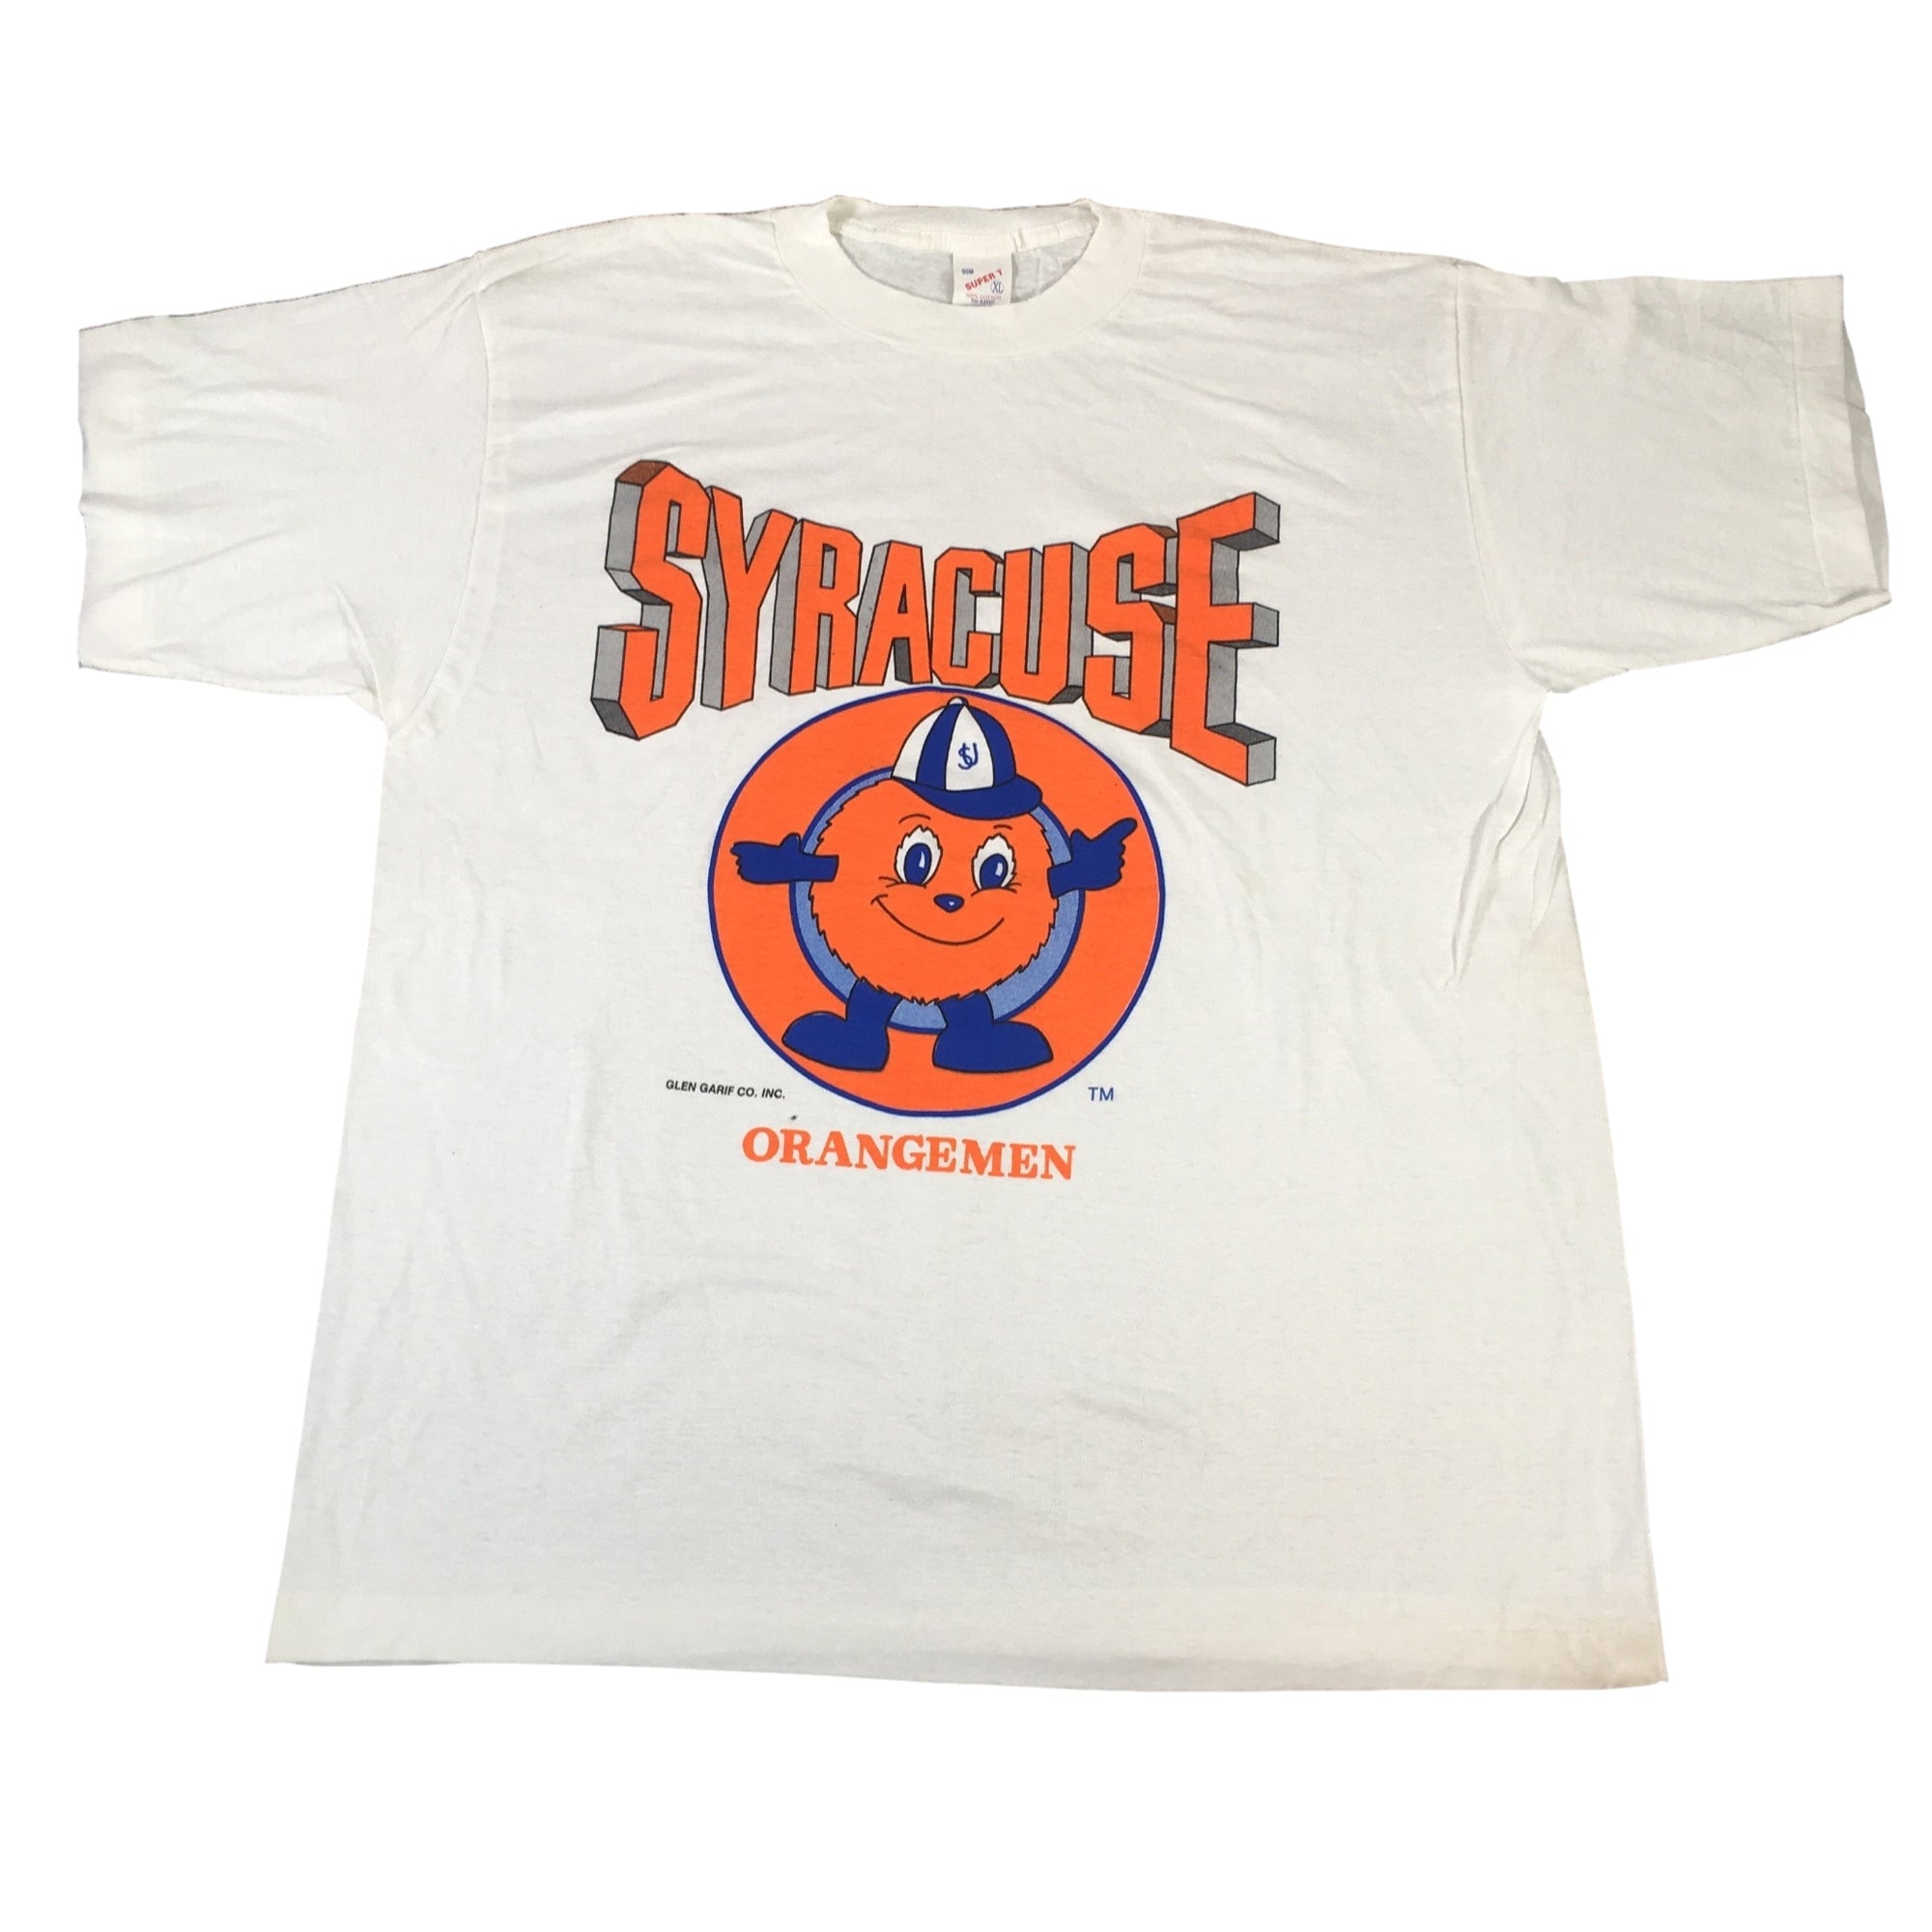 Vintage Syracuse "Orangemen" T-Shirt - jointcustodydc